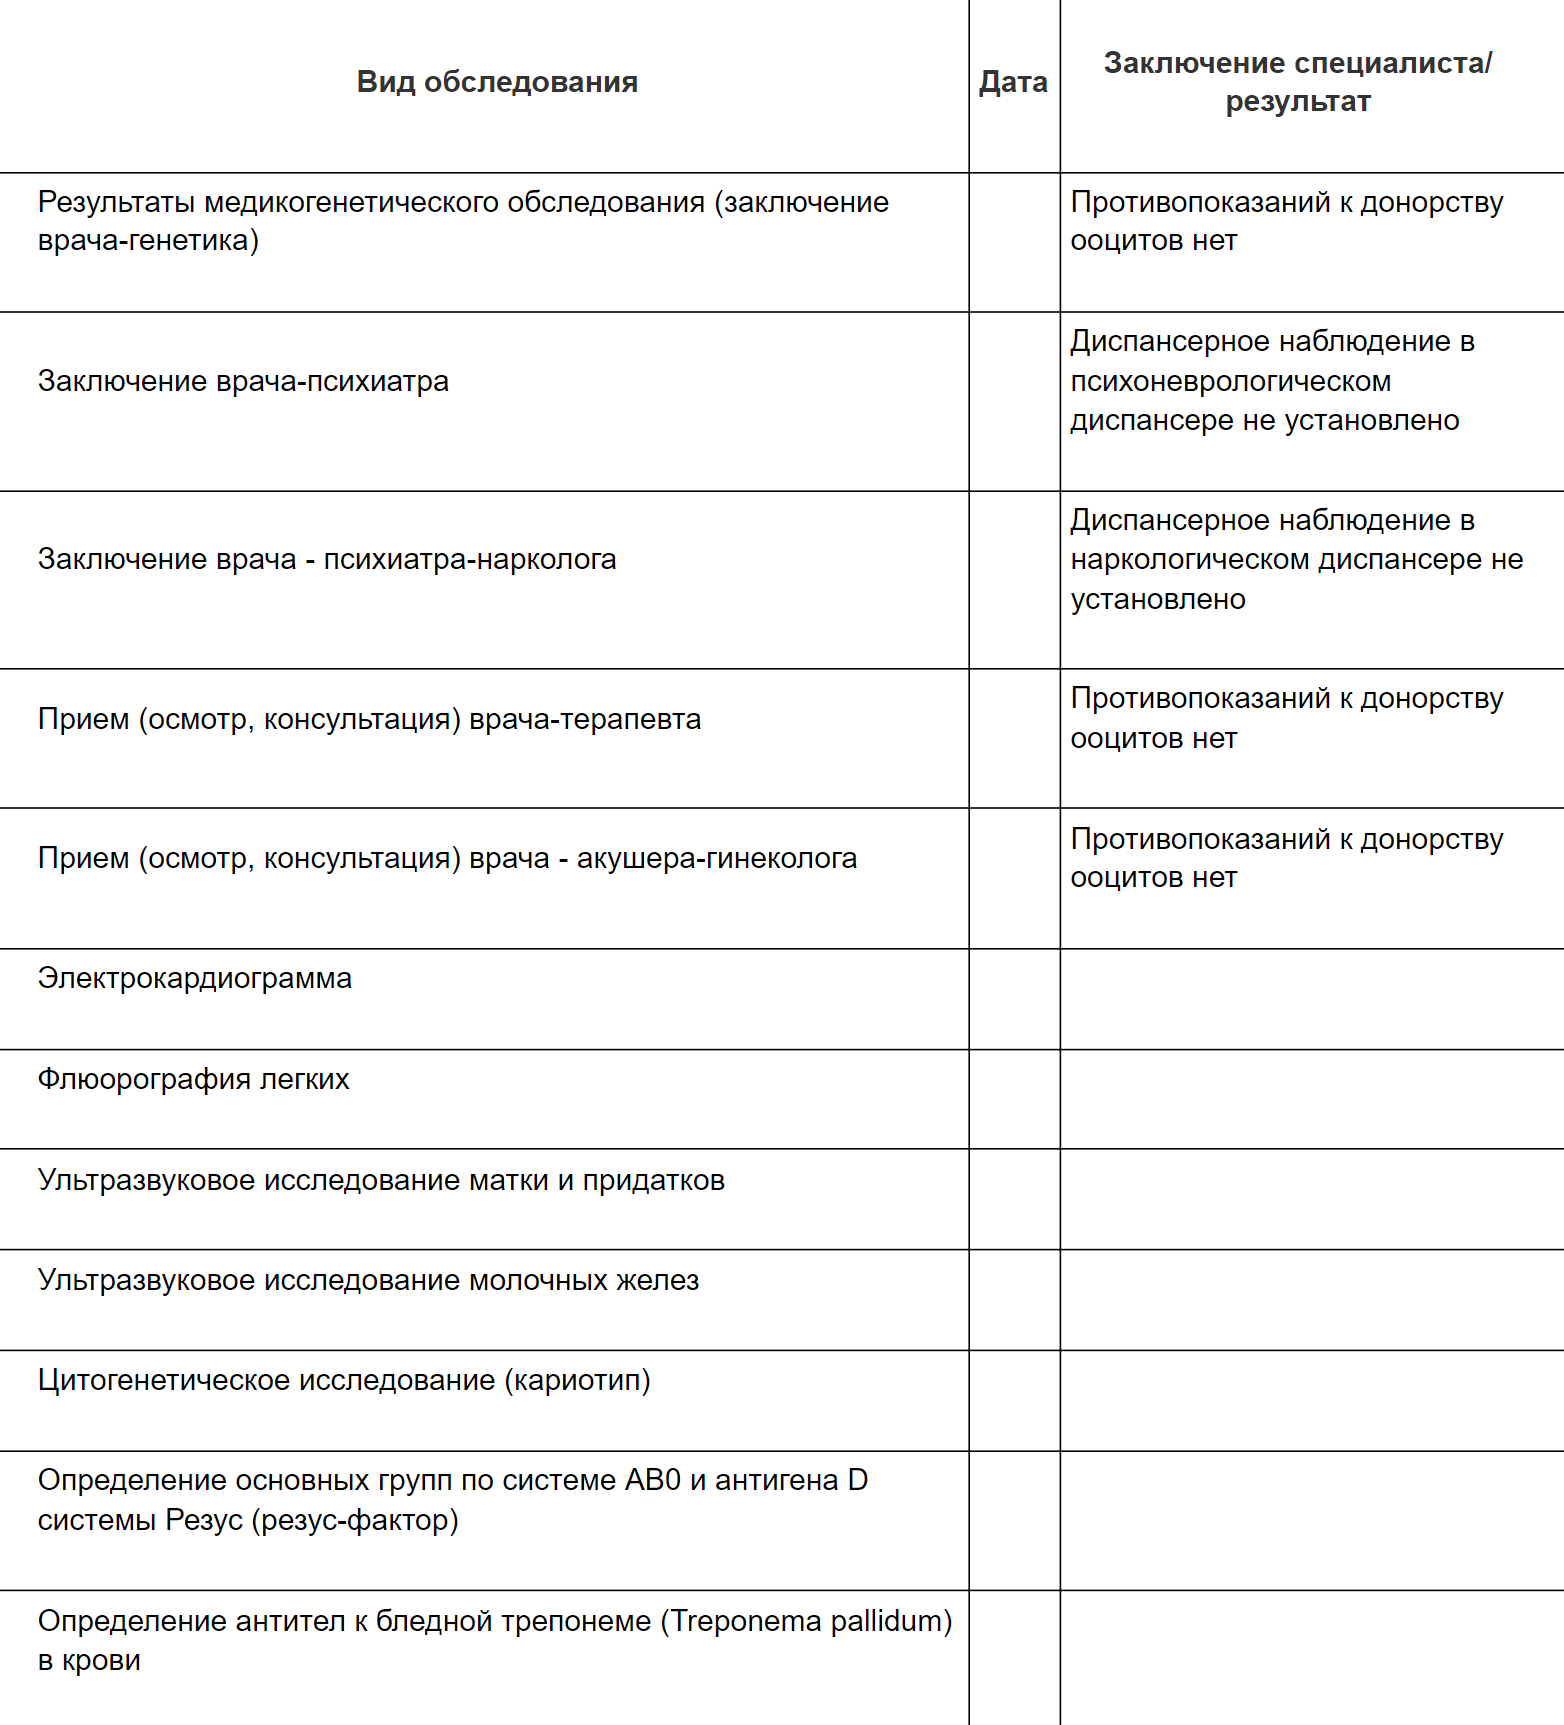 Карта обследований донора ооцитов. Источник: приказ Минздрава РФ от 31.07.2020 № 803н